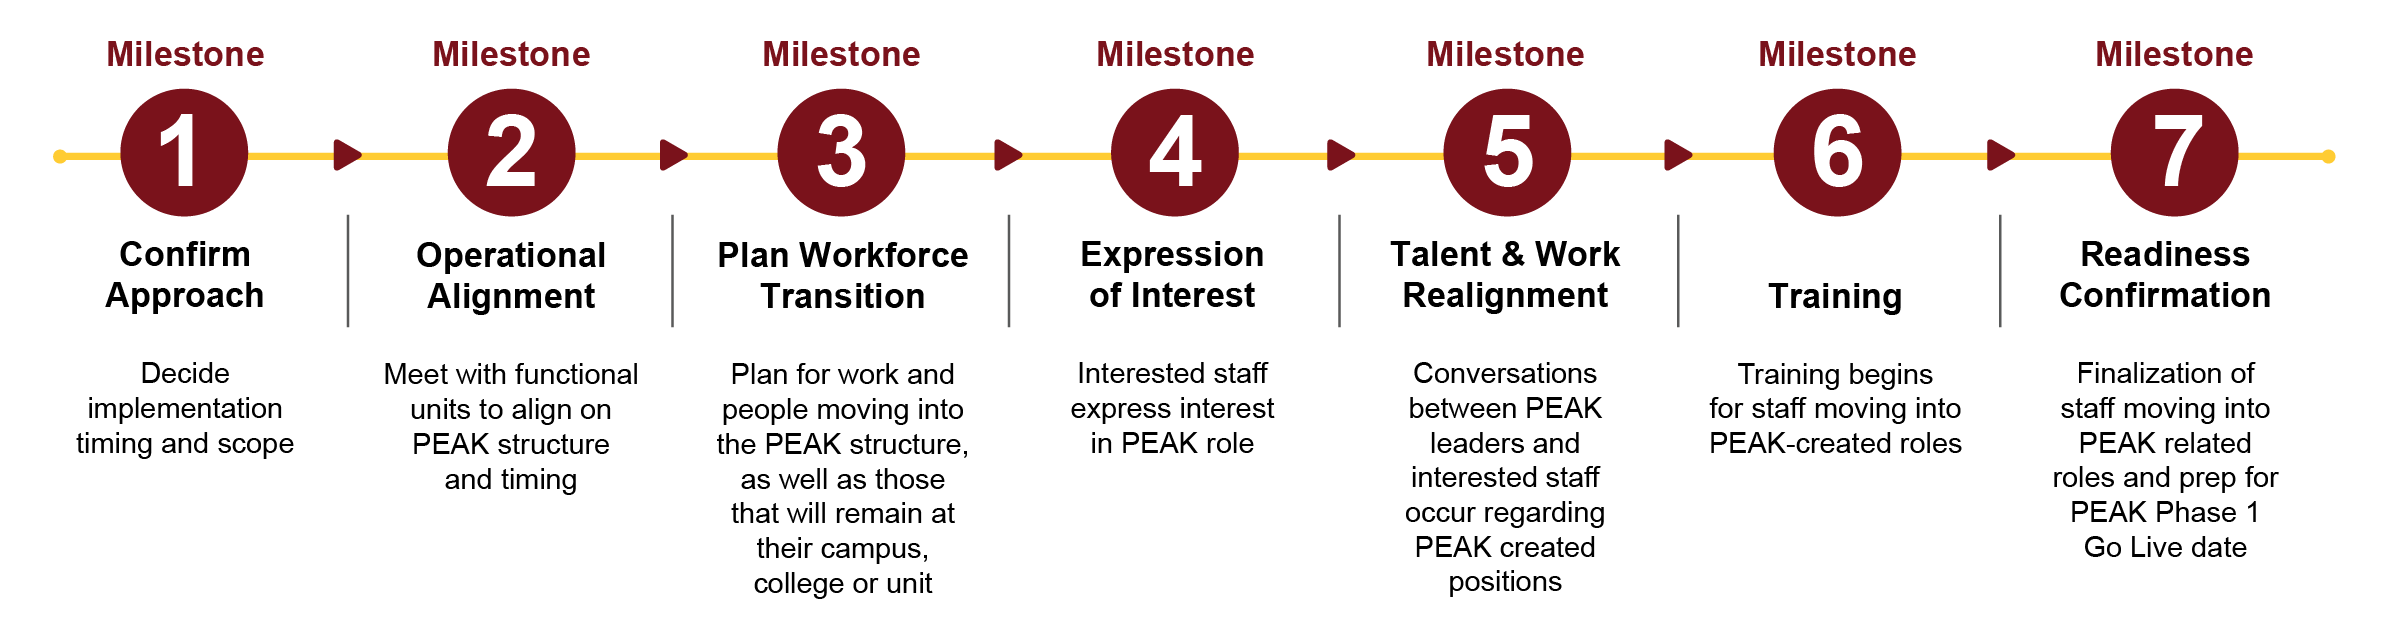 PEAK Implementation Phase 1 infographic 2.2023